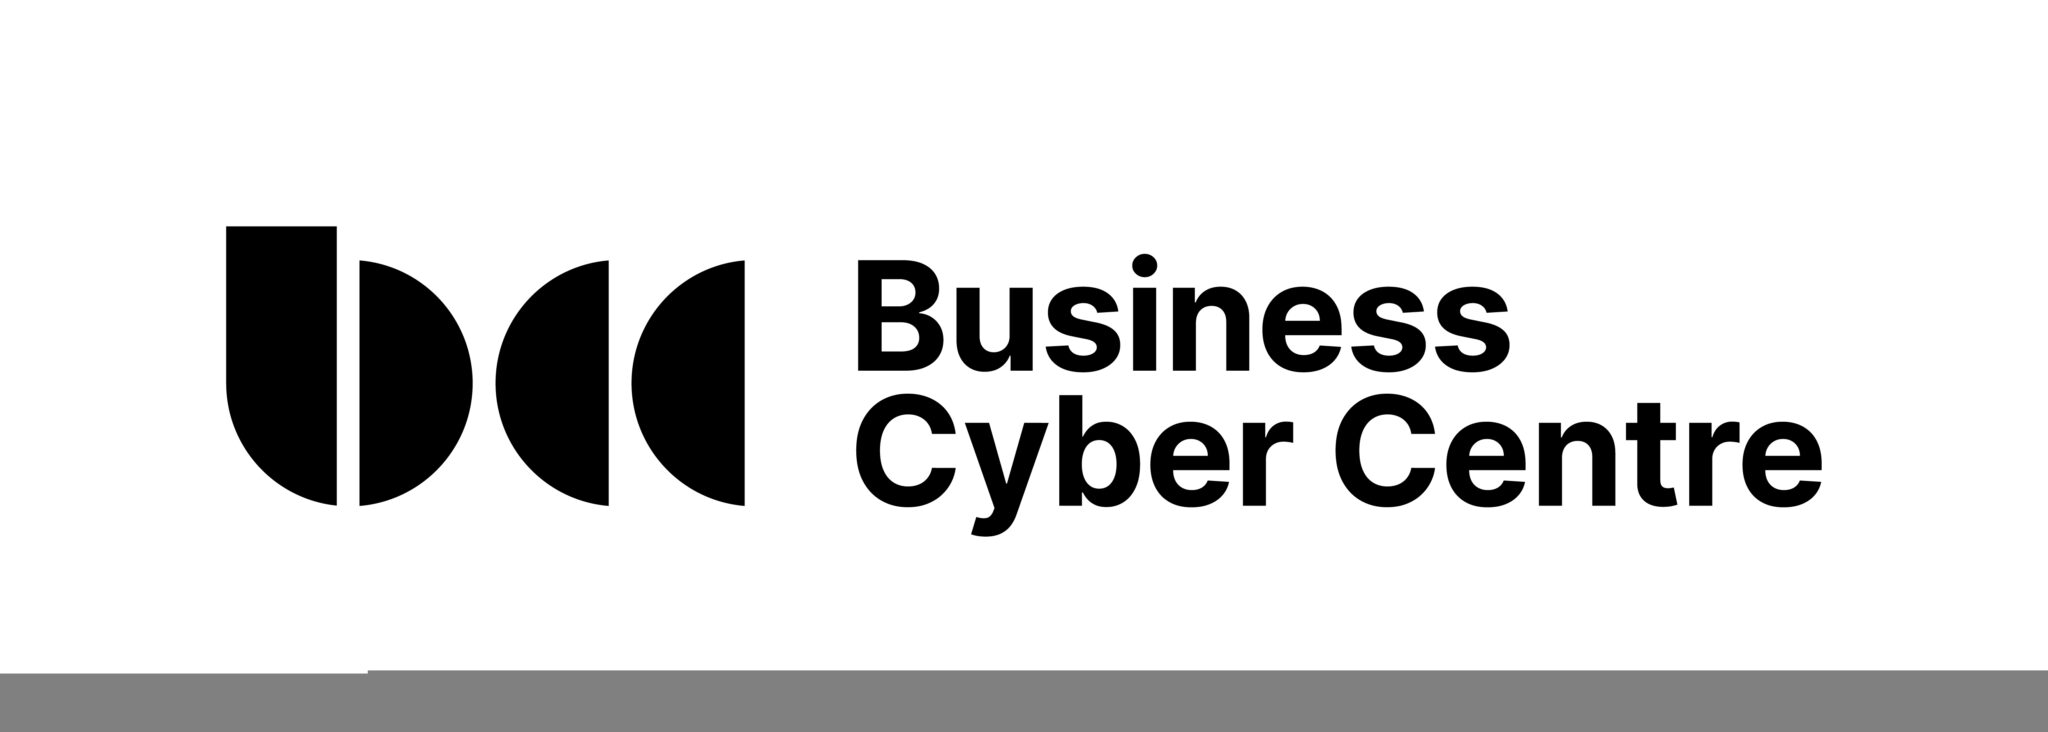 Business Cyber Centre Logo